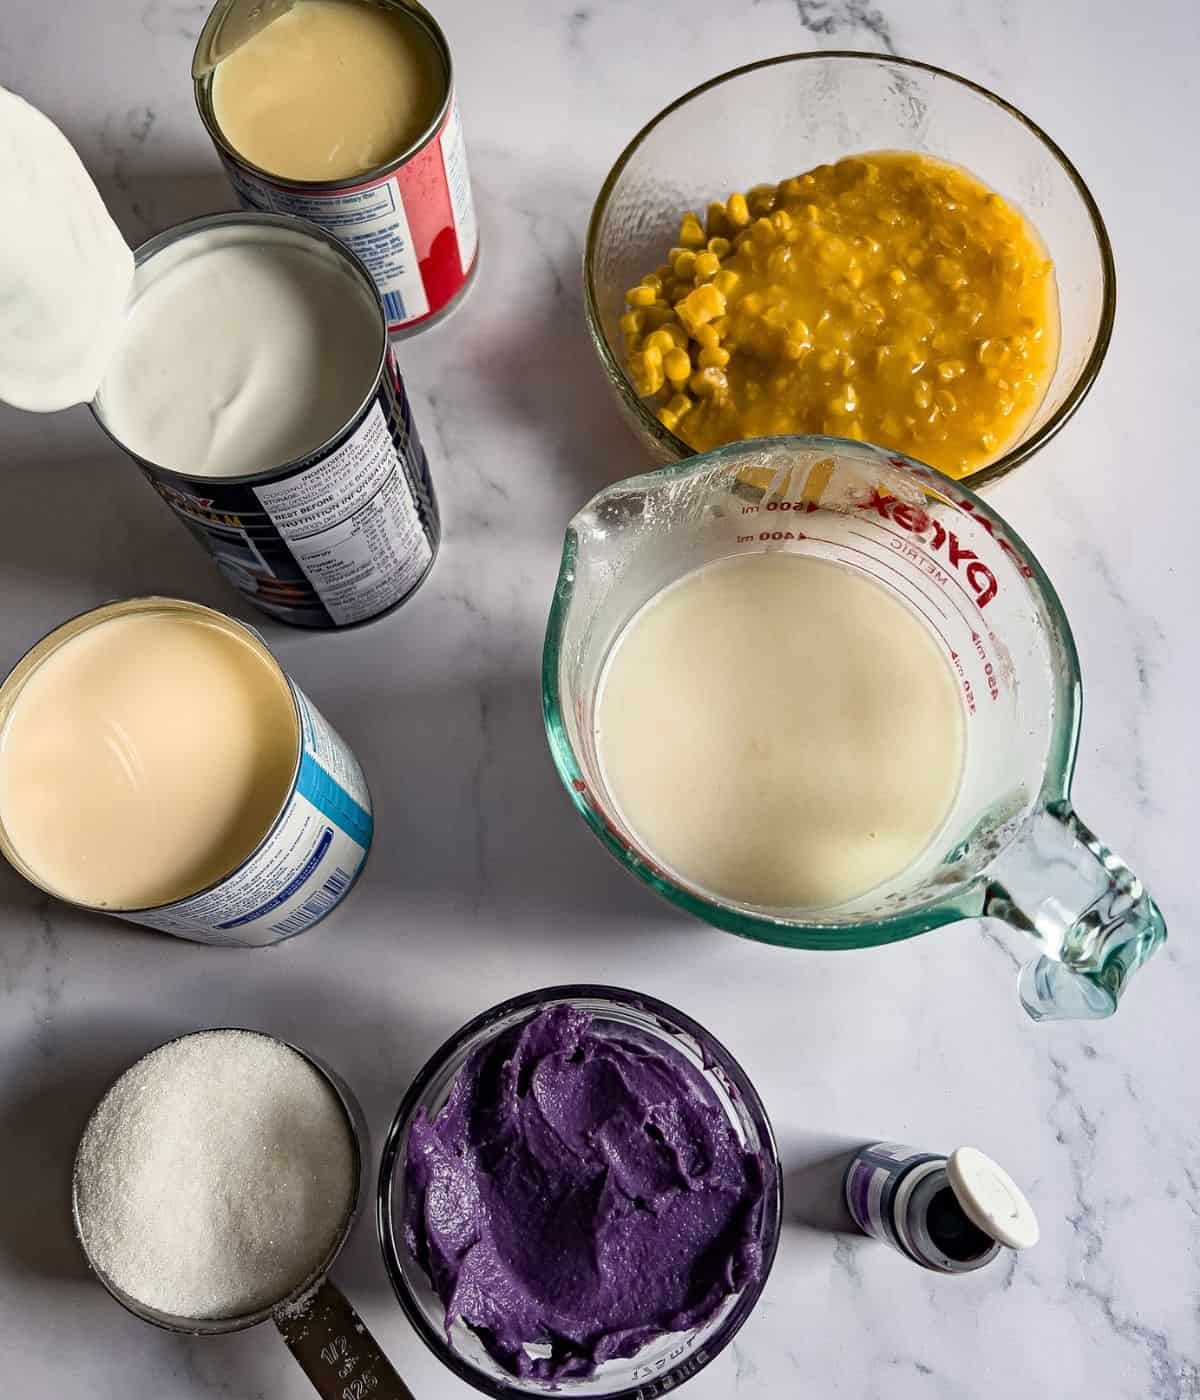 Ingredients for ube maja blanca recipe.